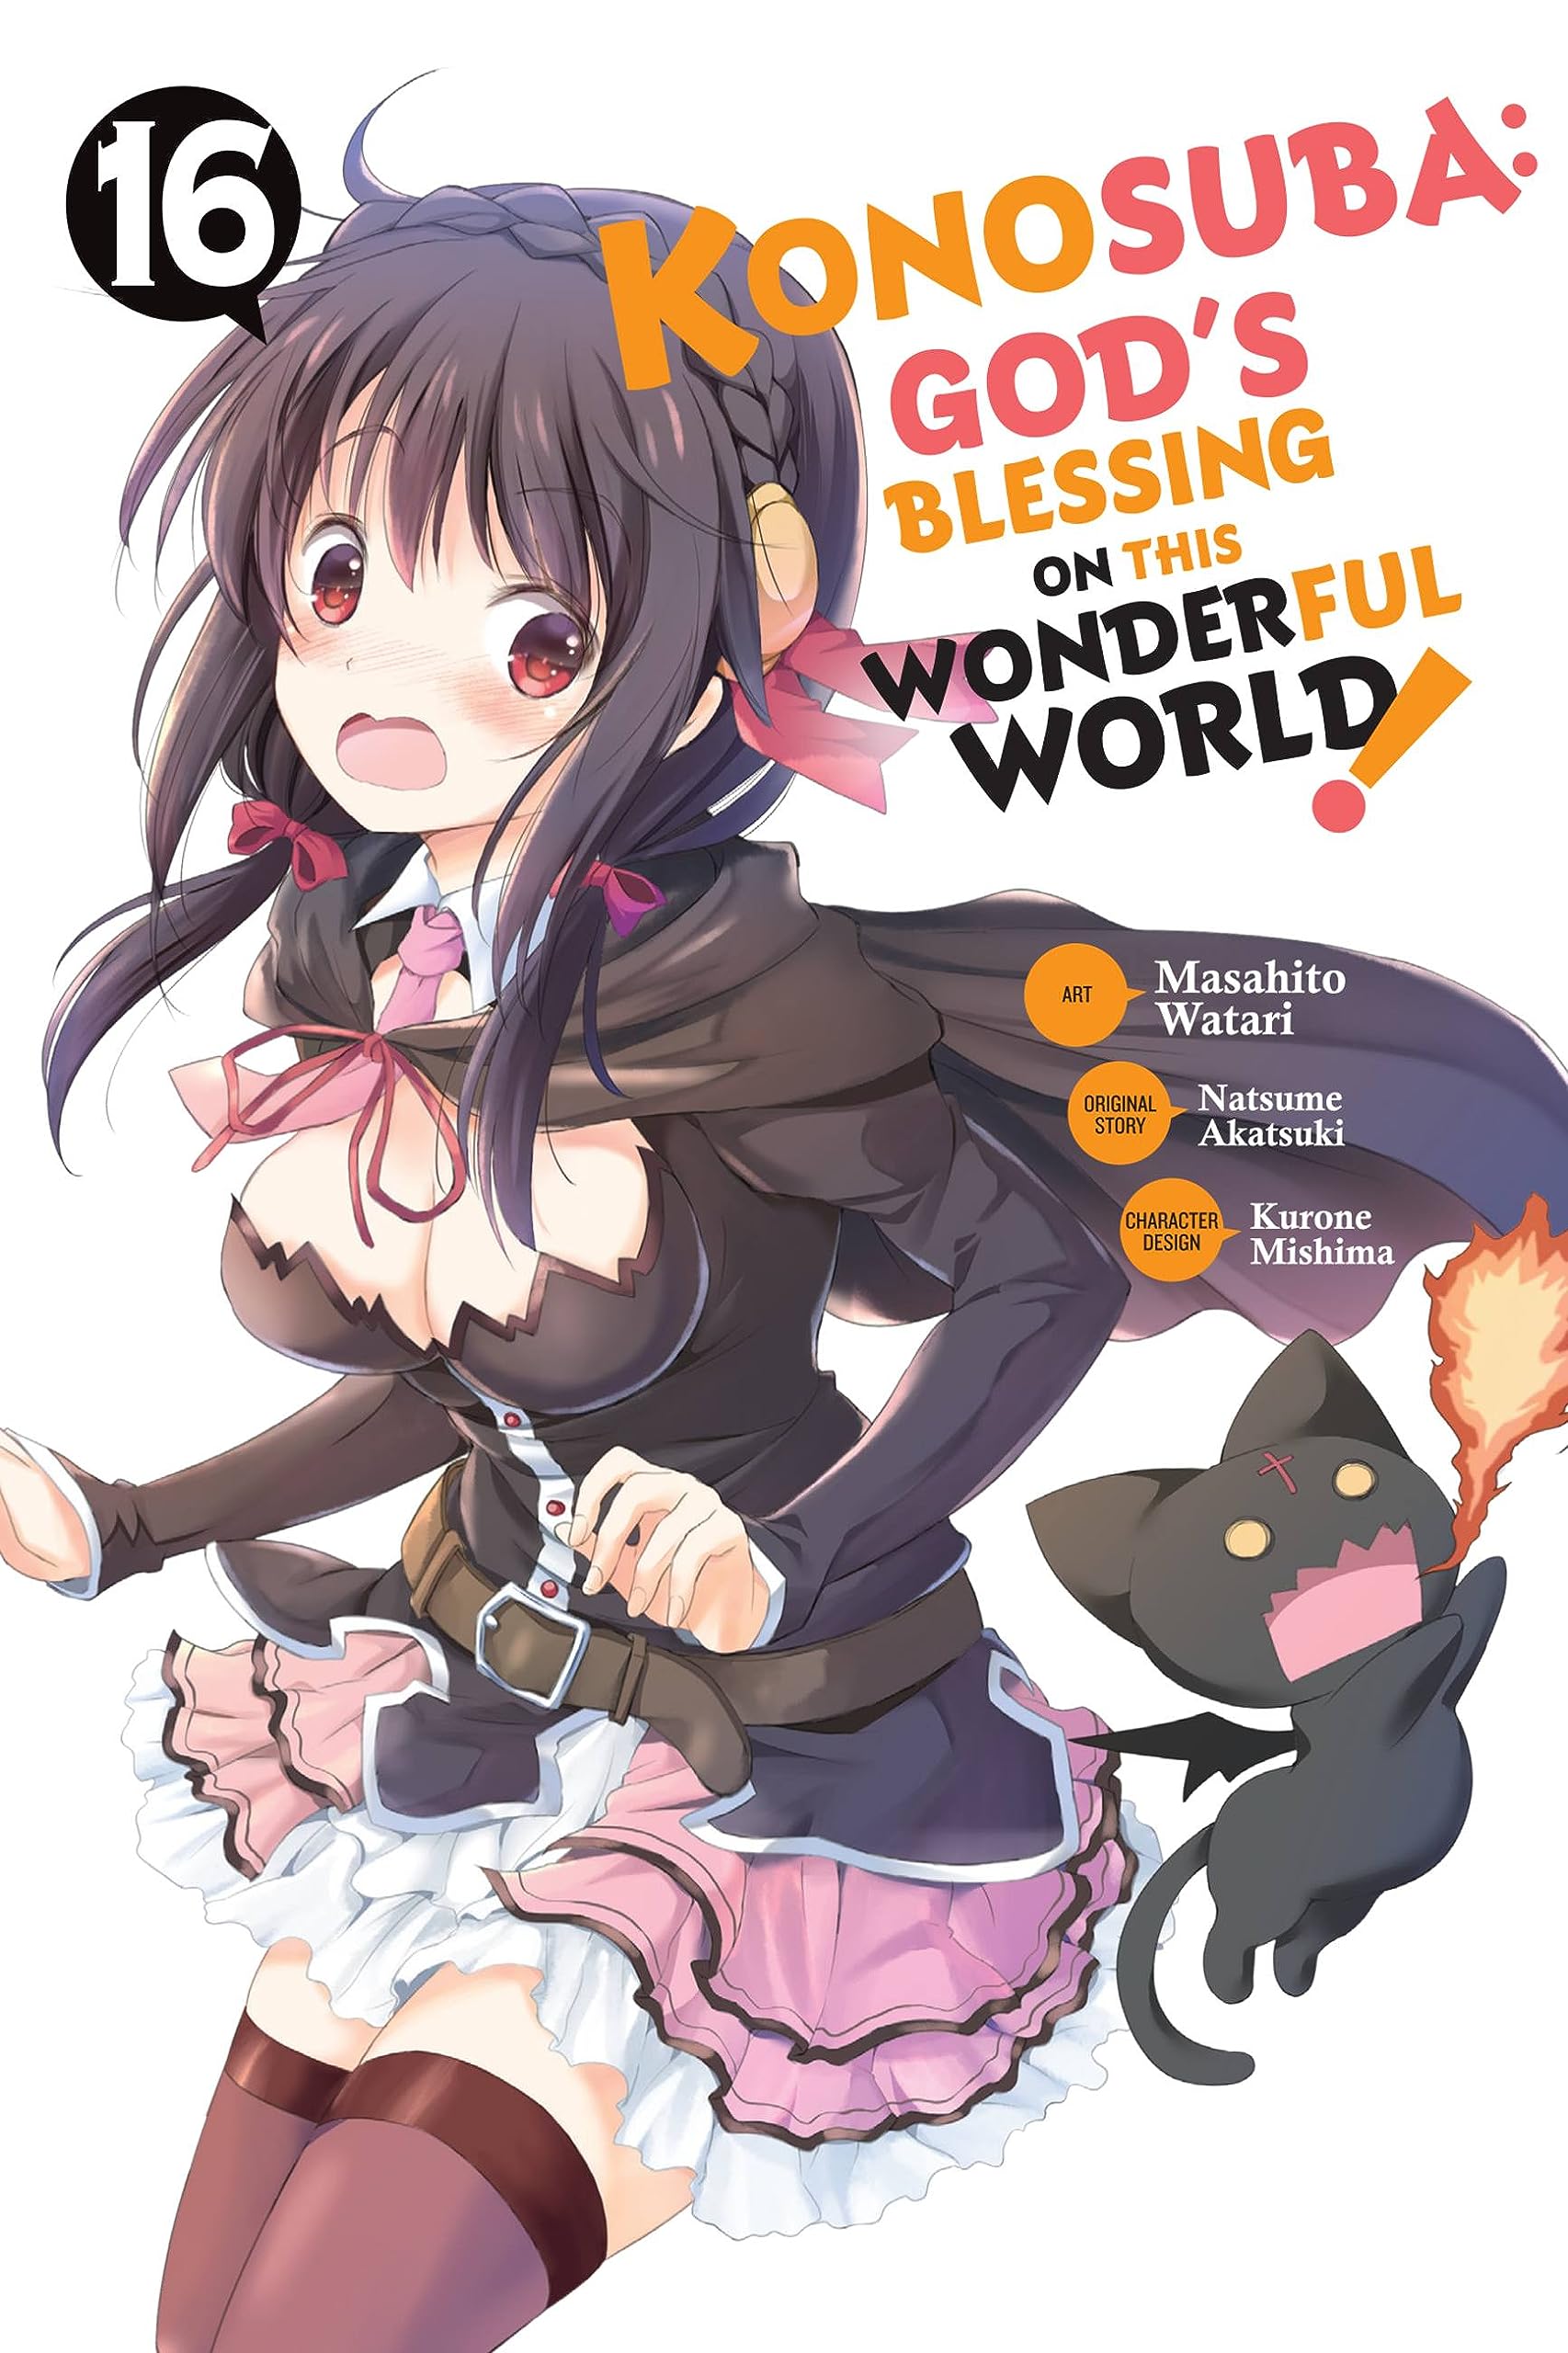 Konosuba: God's Blessing on This Wonderful World! (Manga) Vol. 16